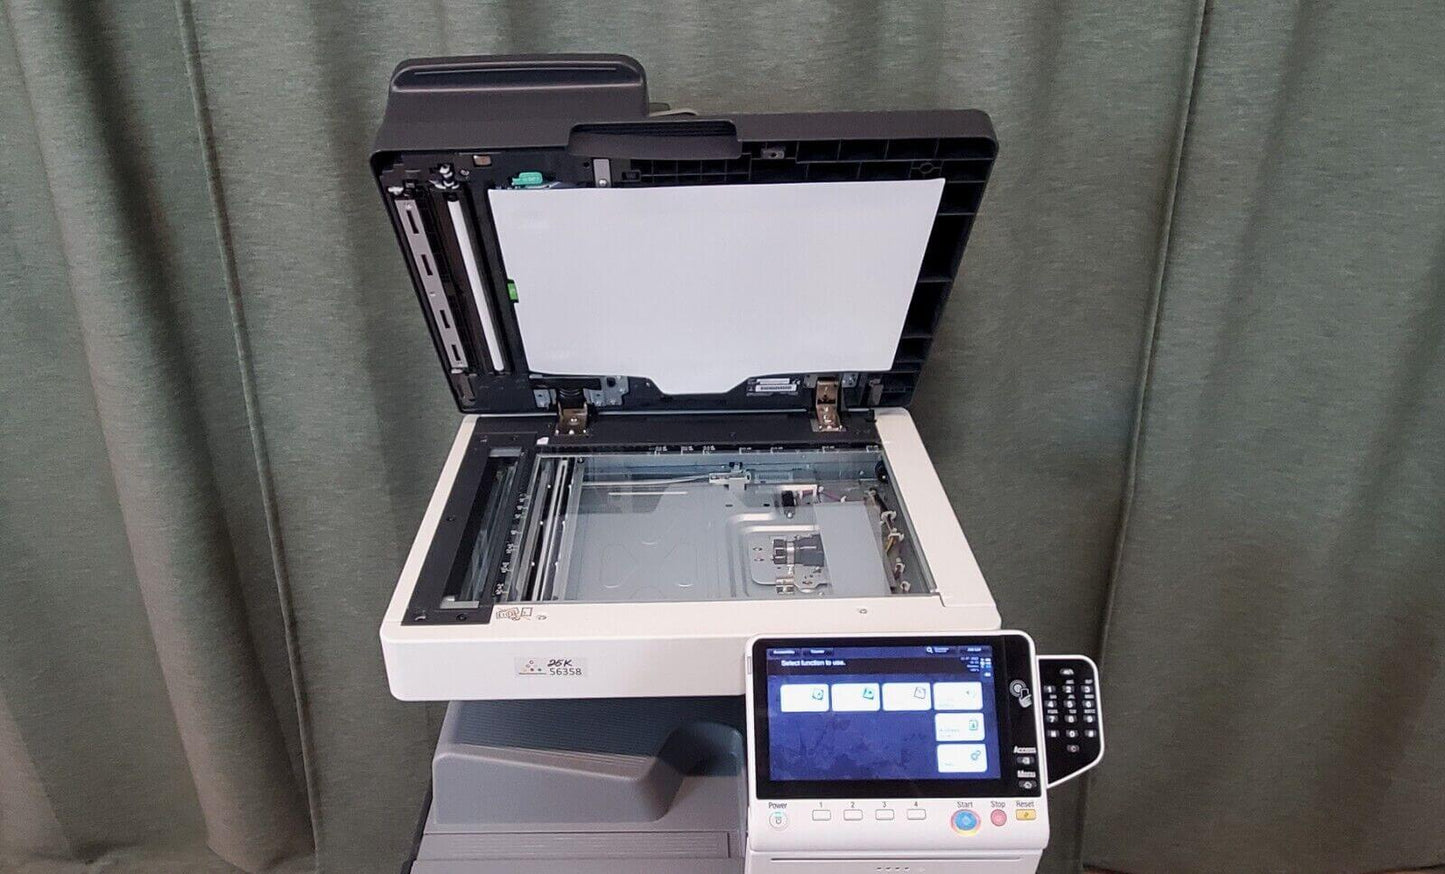 Konica Minolta Bizhub C258 Color Copier Printer Scan Fax Network Low 25K Usage!! - copier-clearance-center